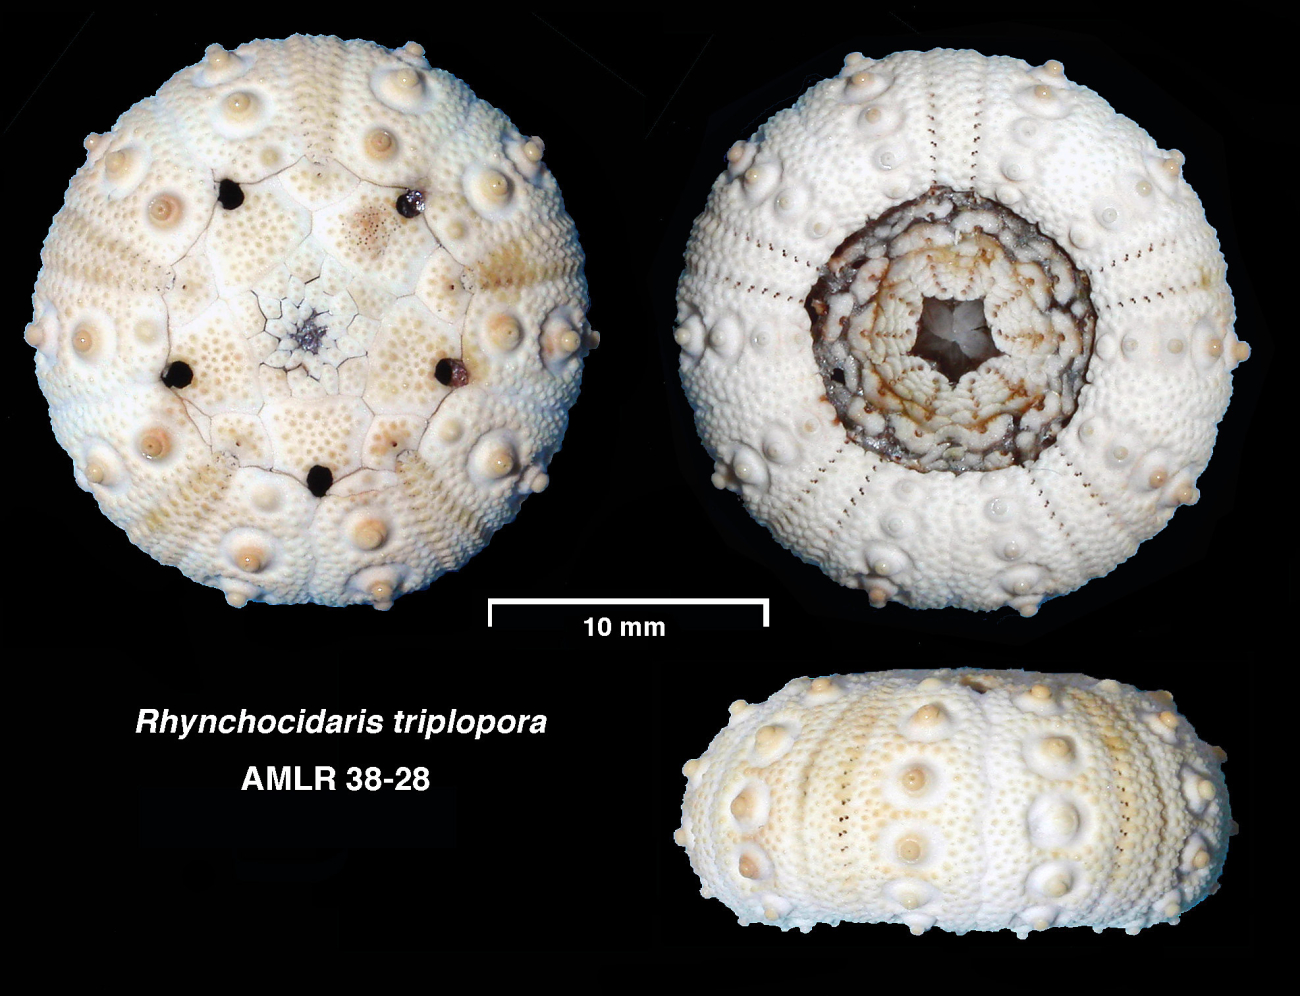 A composite photo of Antarctic sea urchins, Rhynchocidaris sp